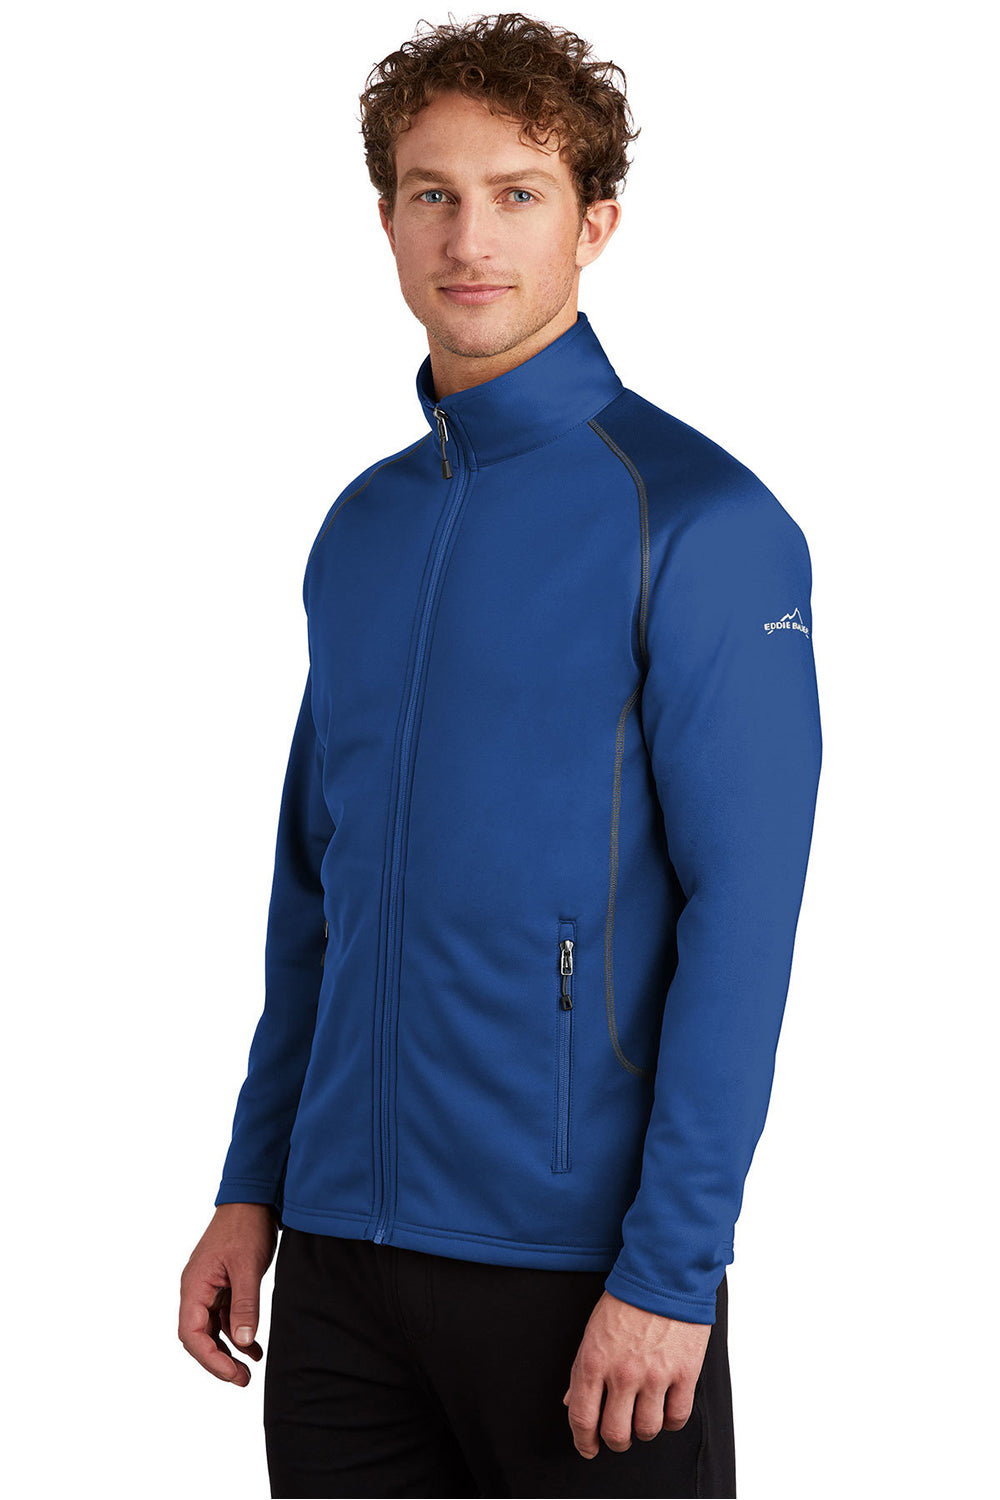 Eddie Bauer EB246 Mens Fleece Full Zip Jacket Cobalt Blue Model 3Q